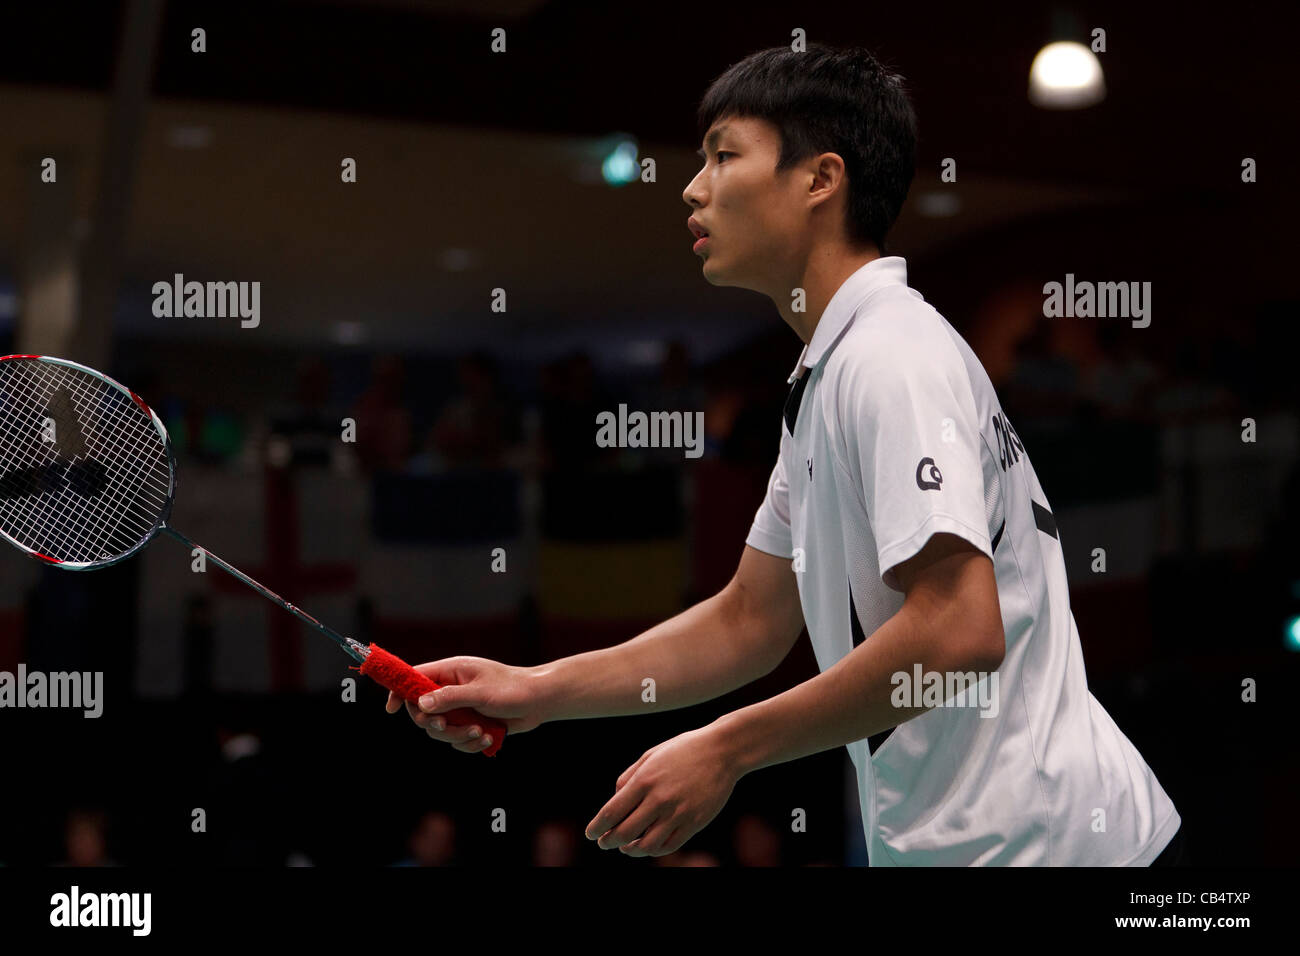 Badminton player taipei chinese Wang Tzu